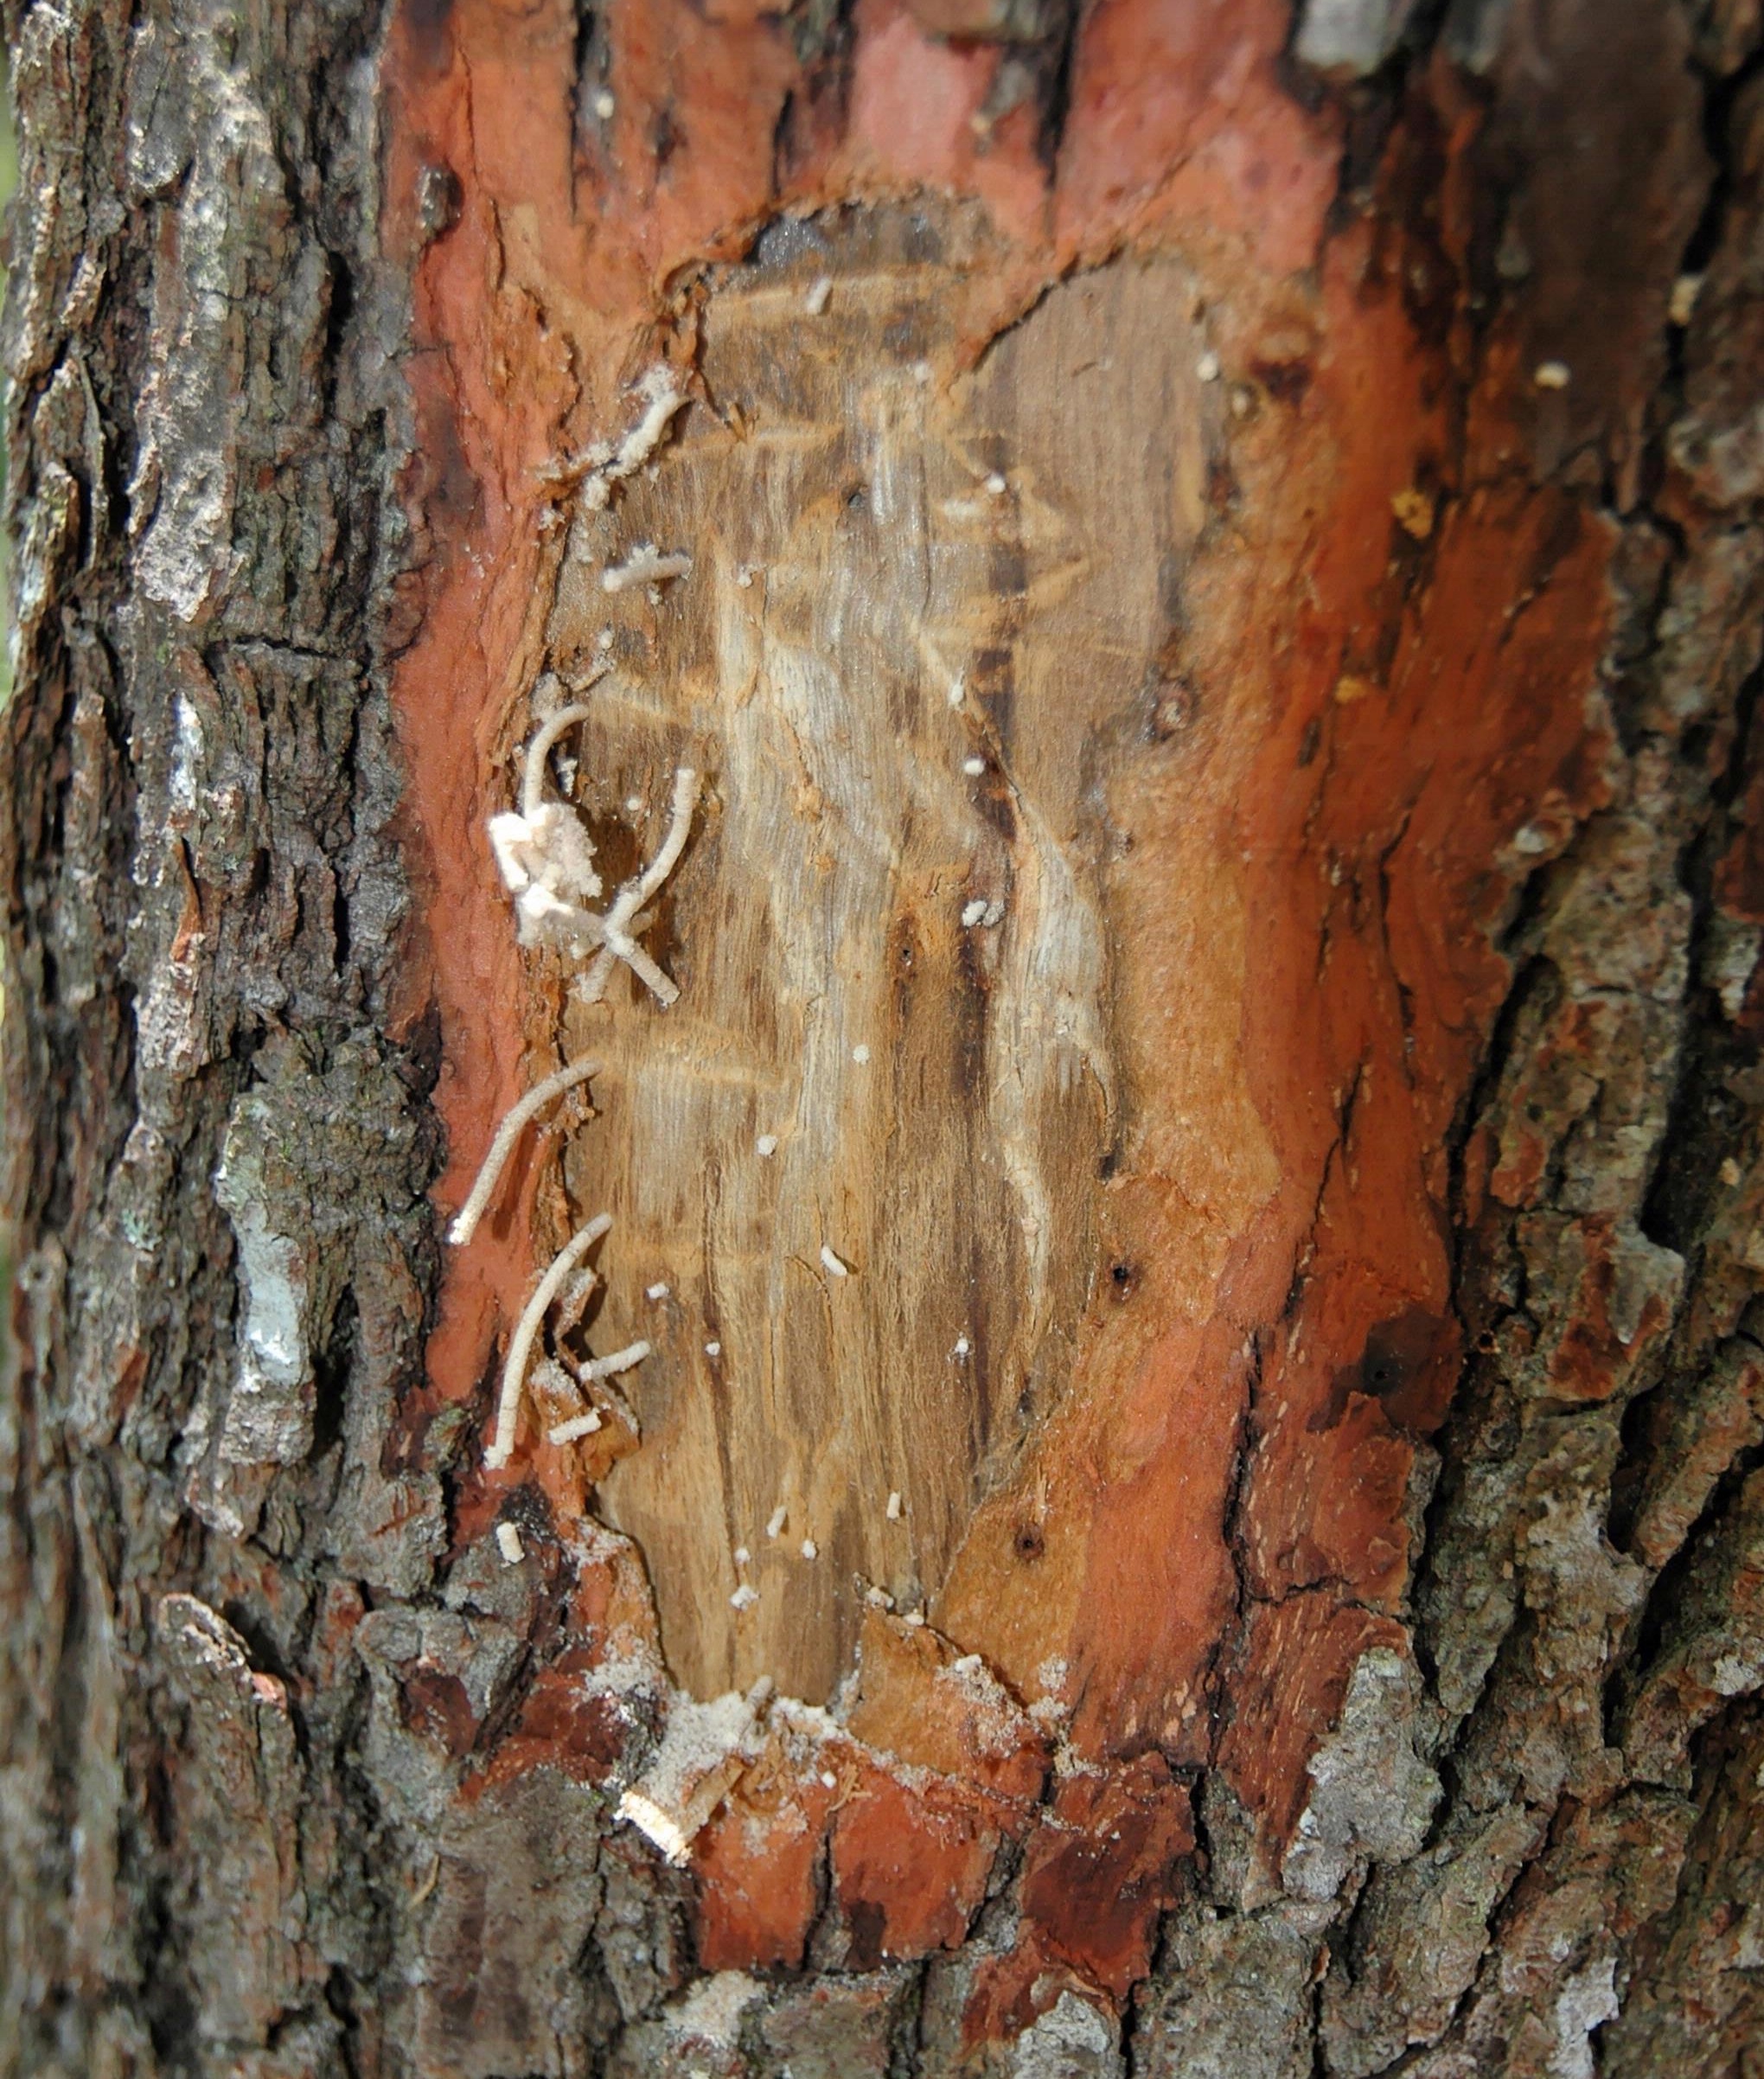 Redbay ambrosia beetle damage